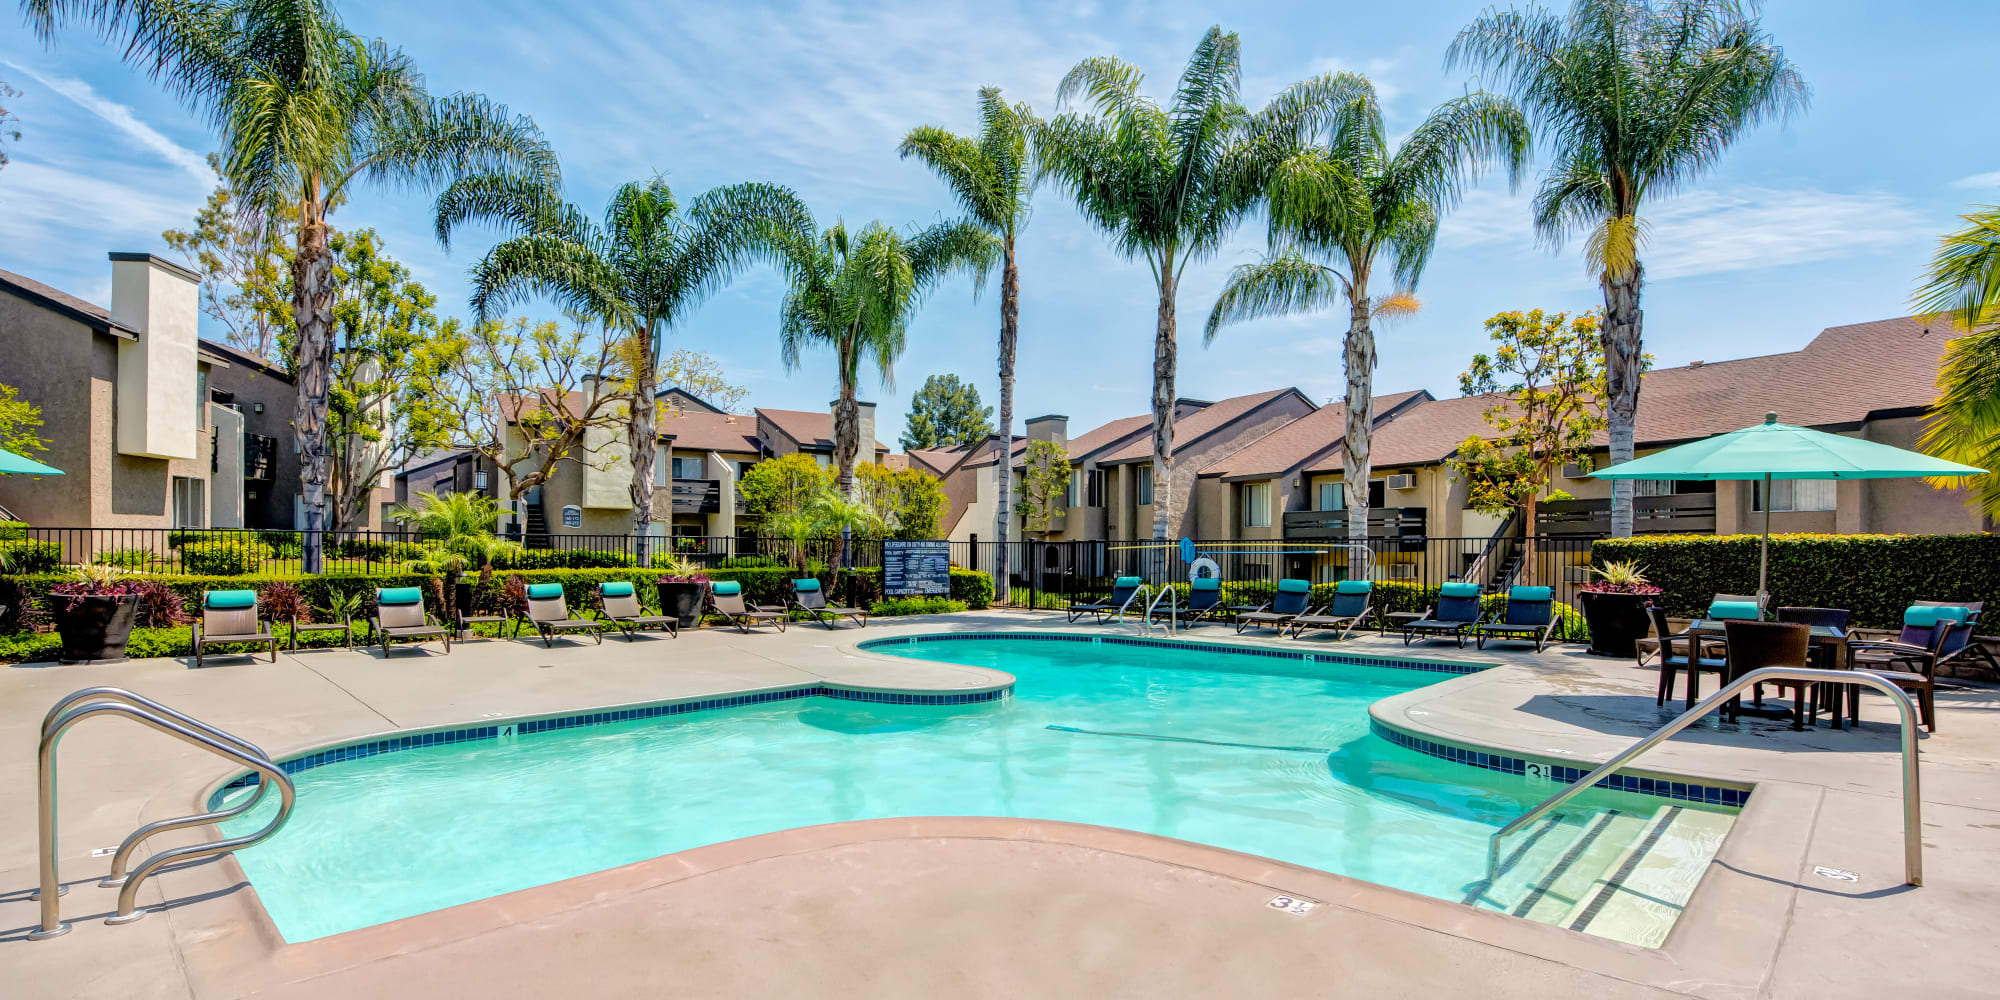 Apartments in Laguna Hills, California, at Sofi Laguna Hills